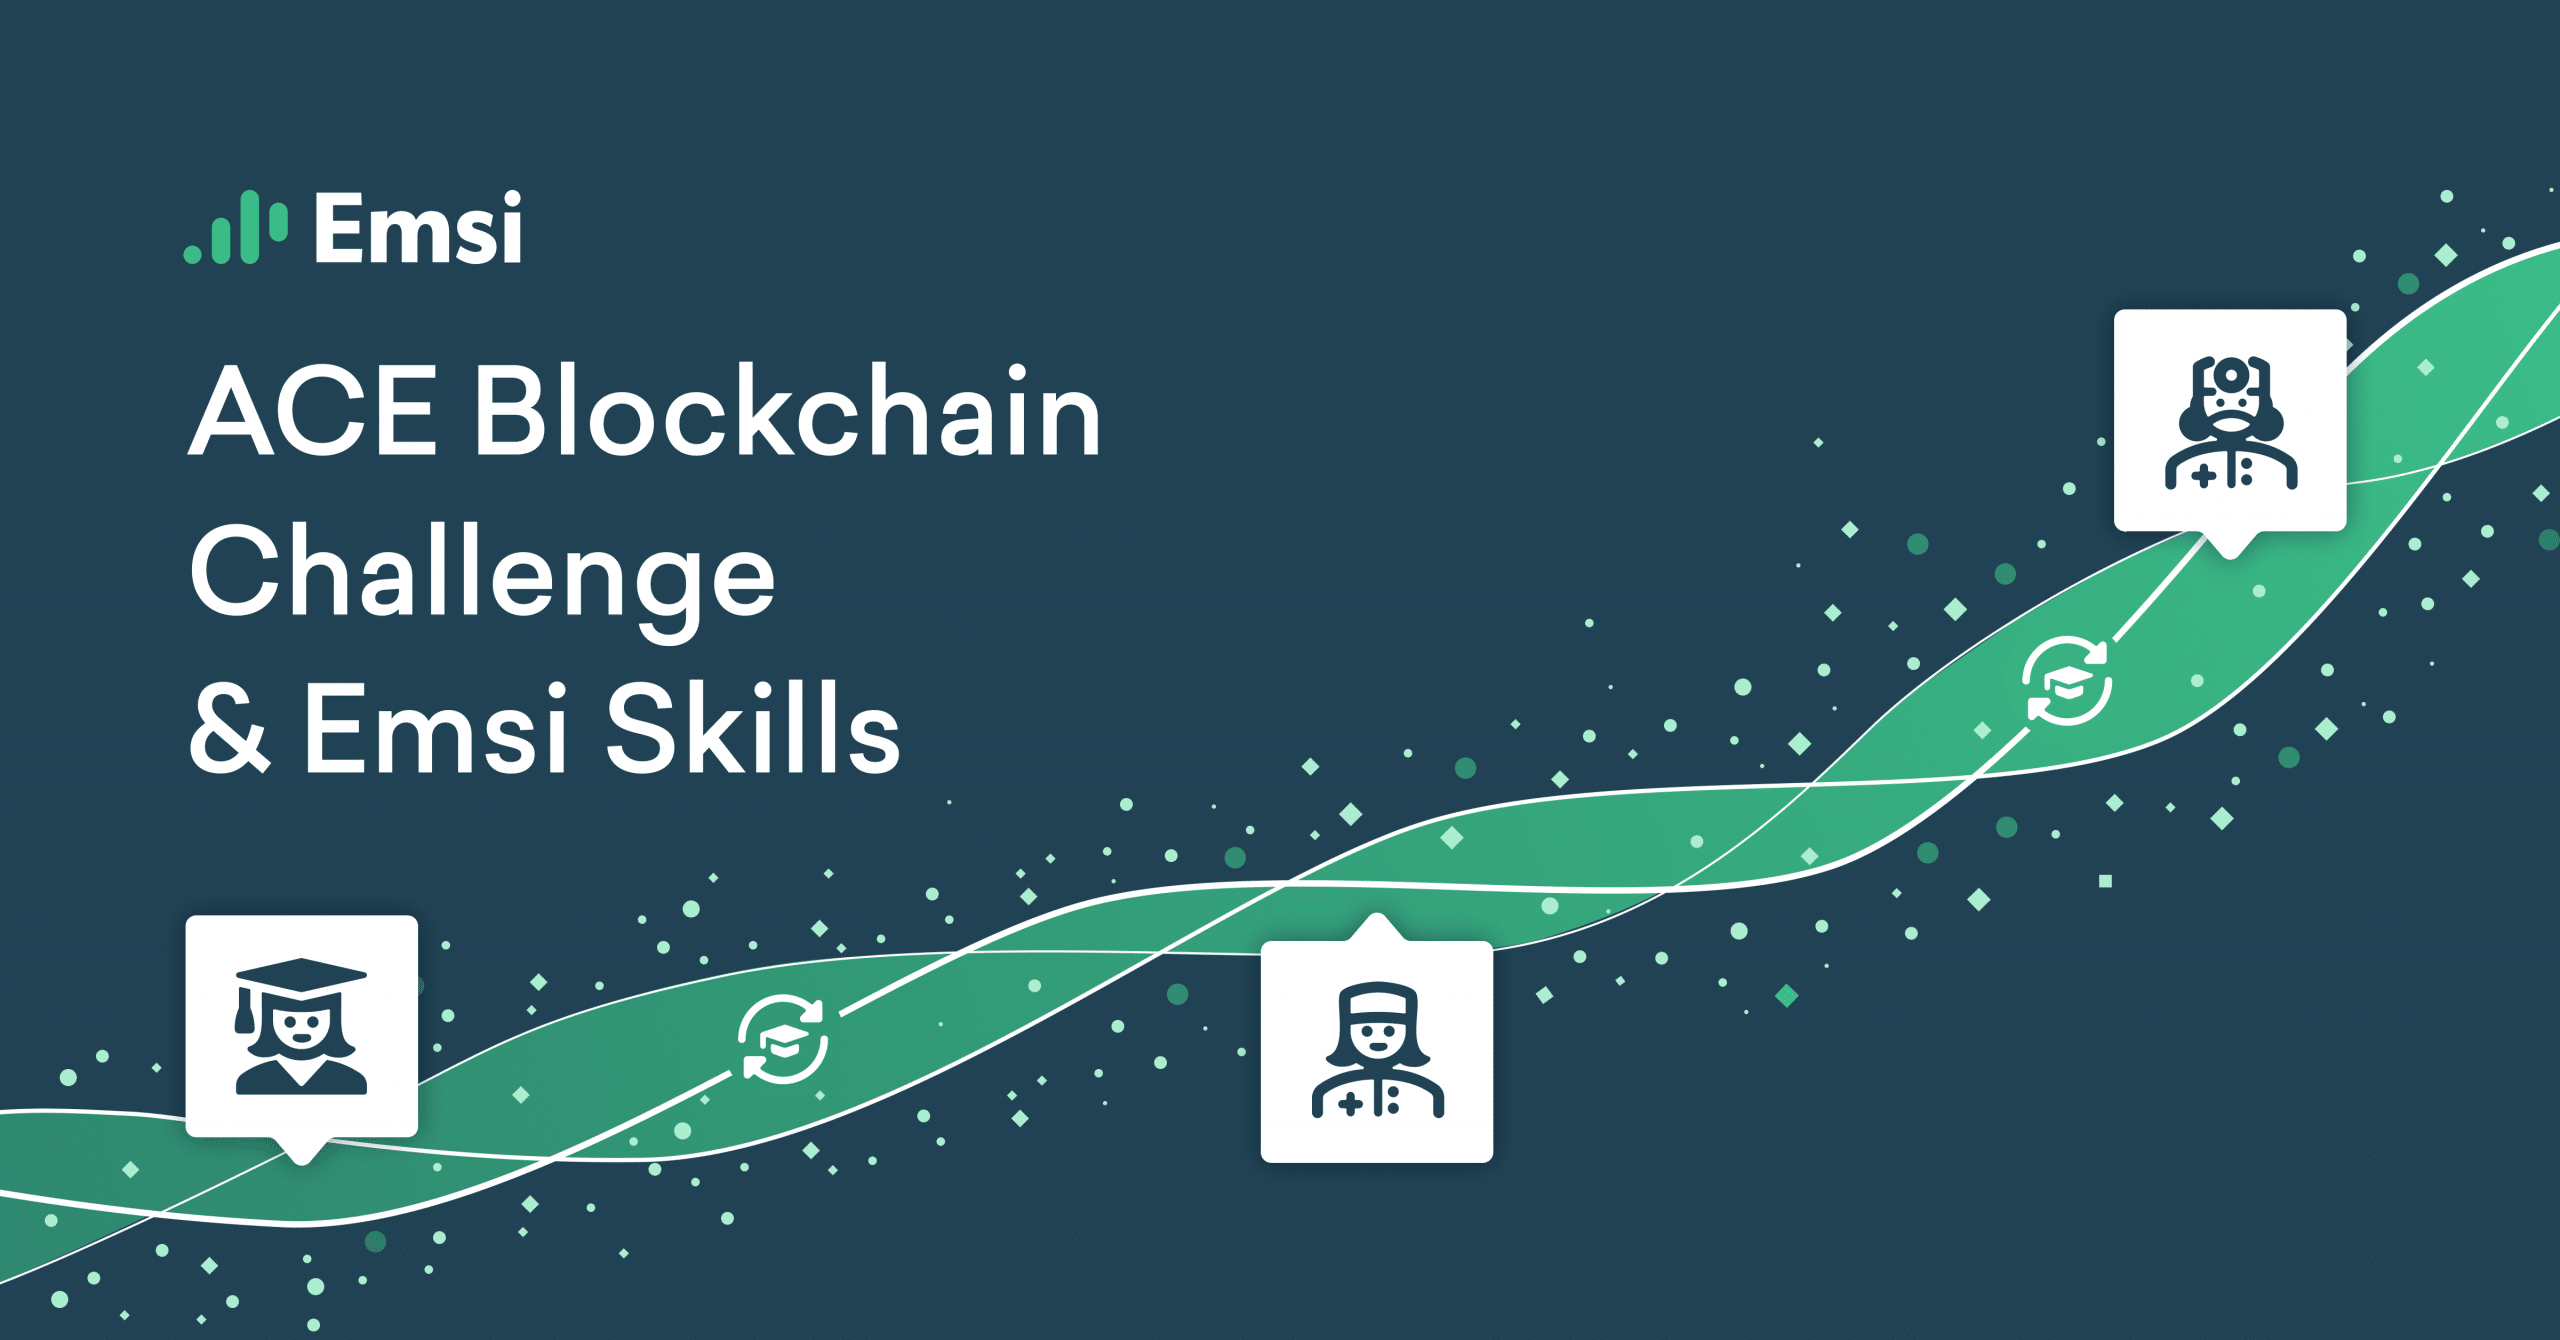 ACE Blockchain Challenge: How Emsi Skills Can Help